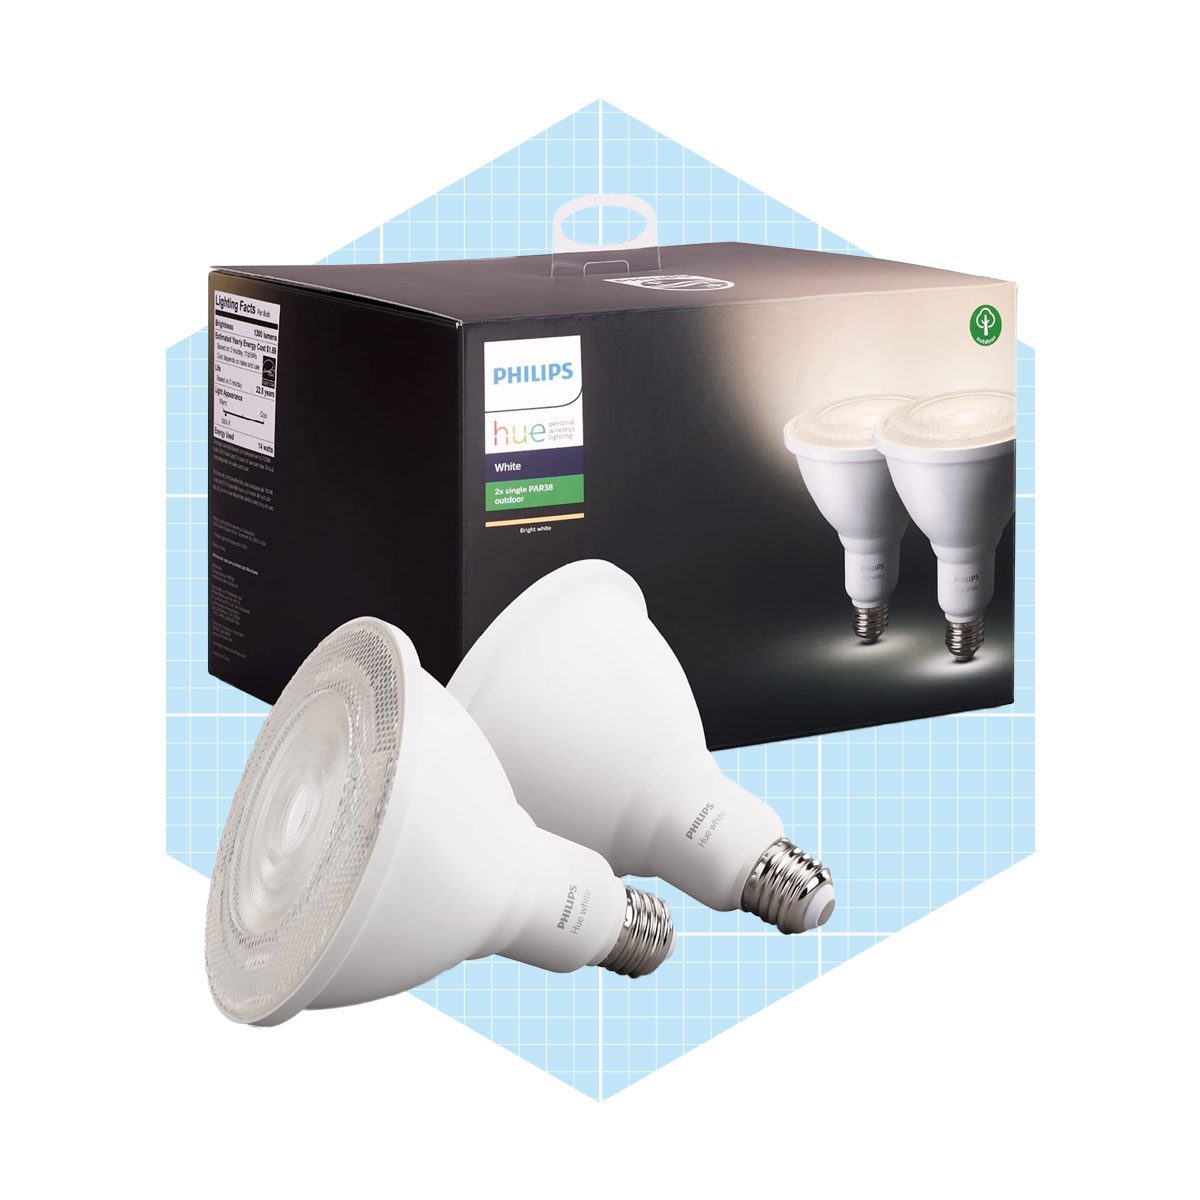 Philips Hue White Outdoor Par38 13w Smart Bulbs